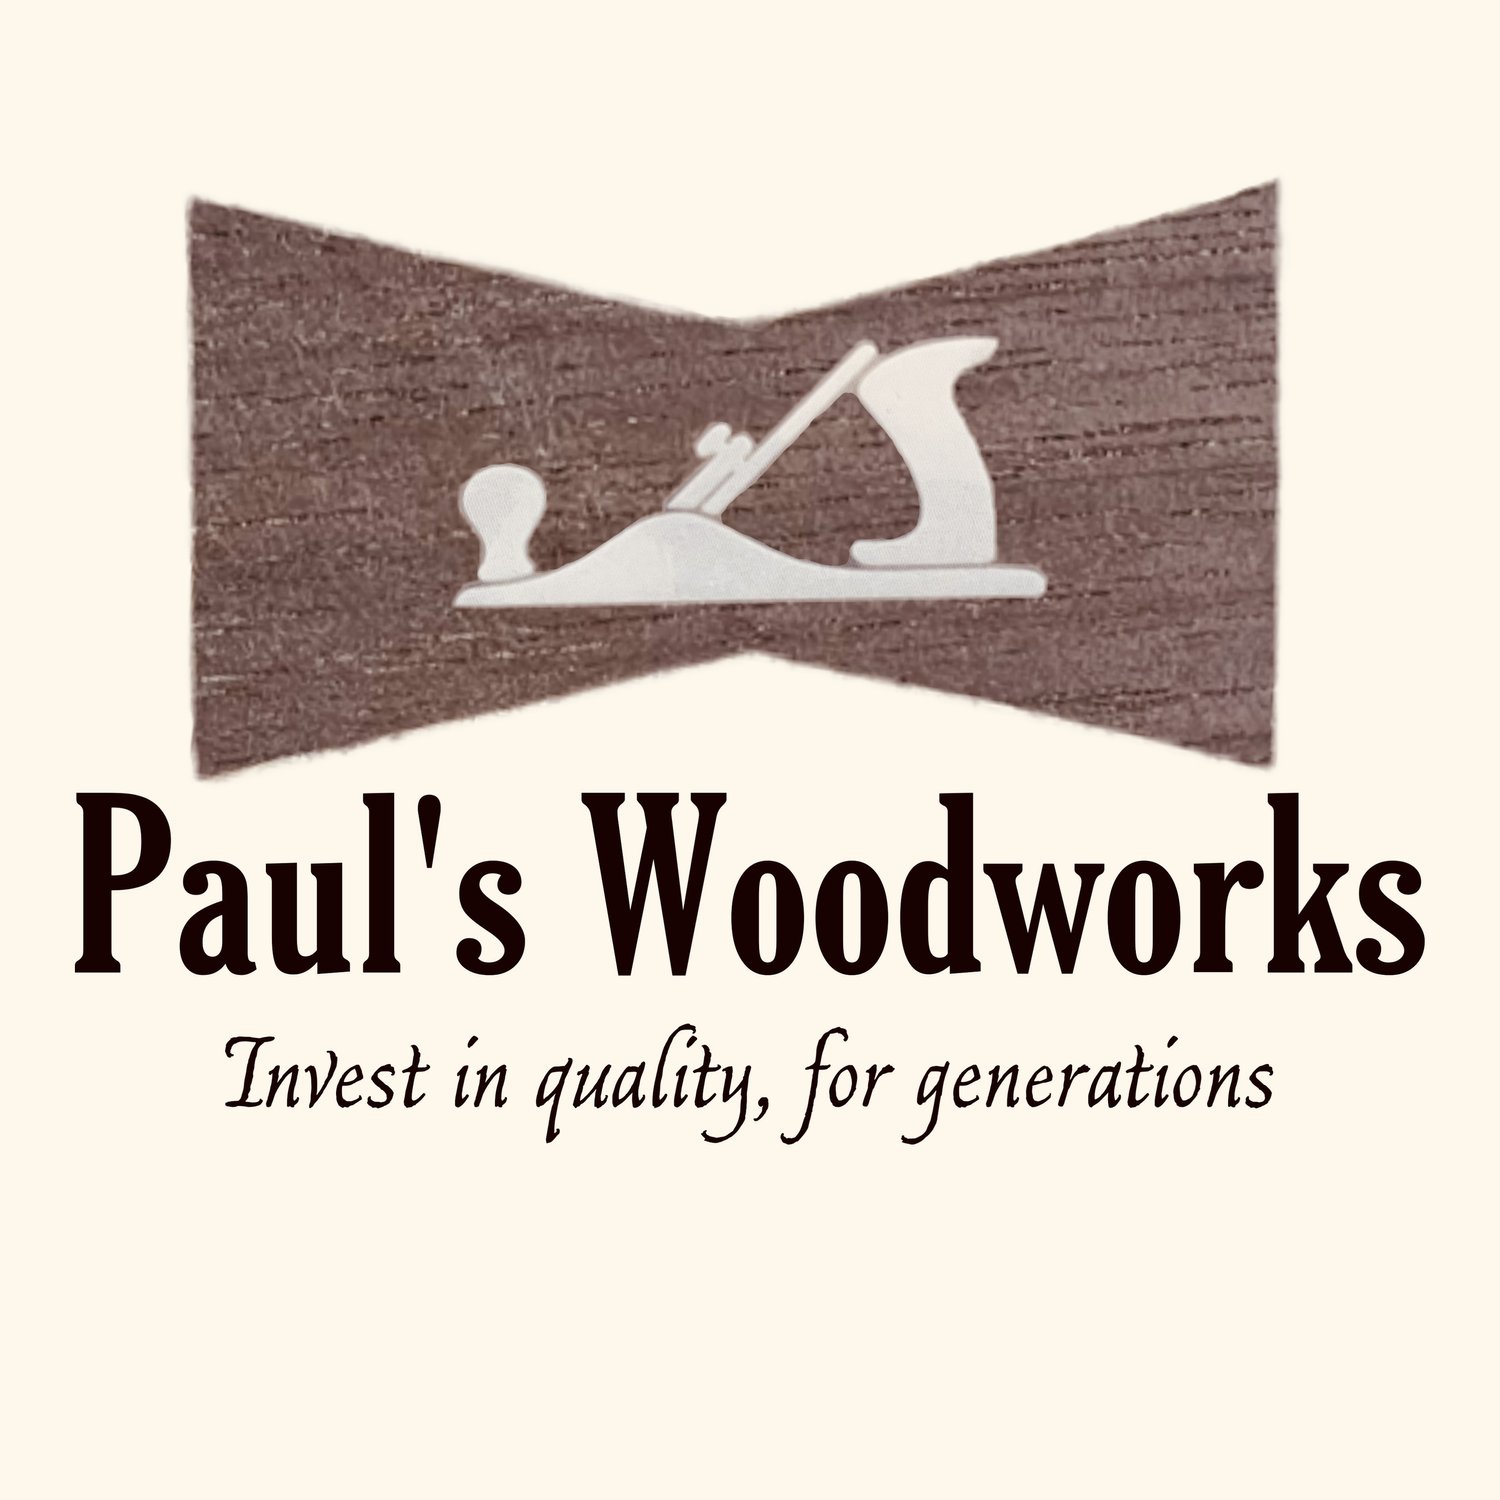 Paul’s Woodworks